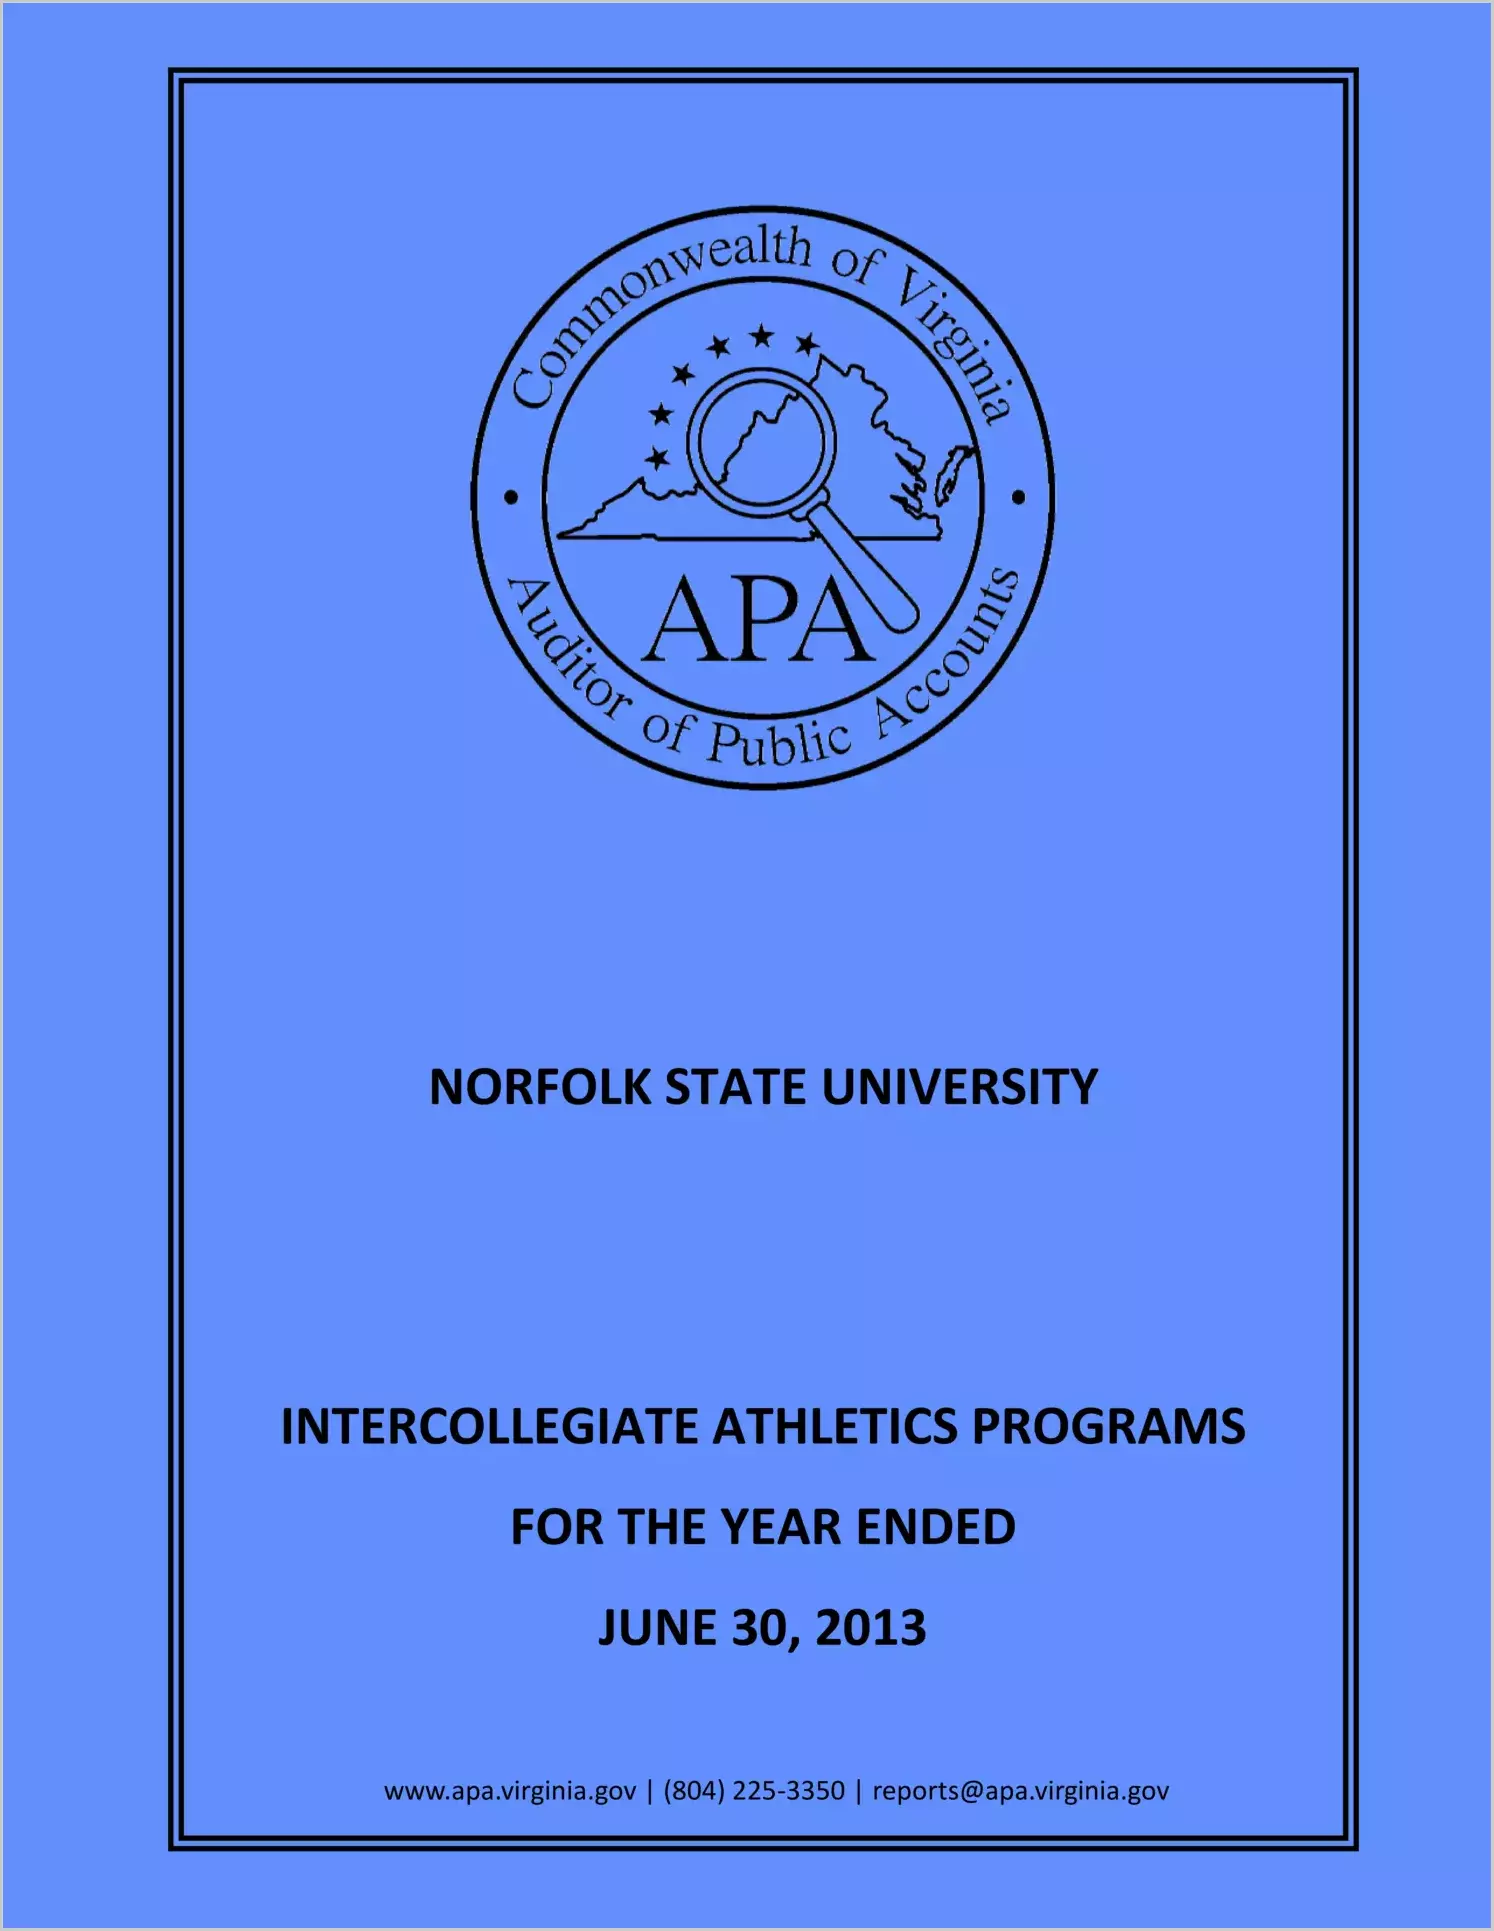 Norfolk State University Intercollegiate Athletics Programs for the year ended June 30, 2013